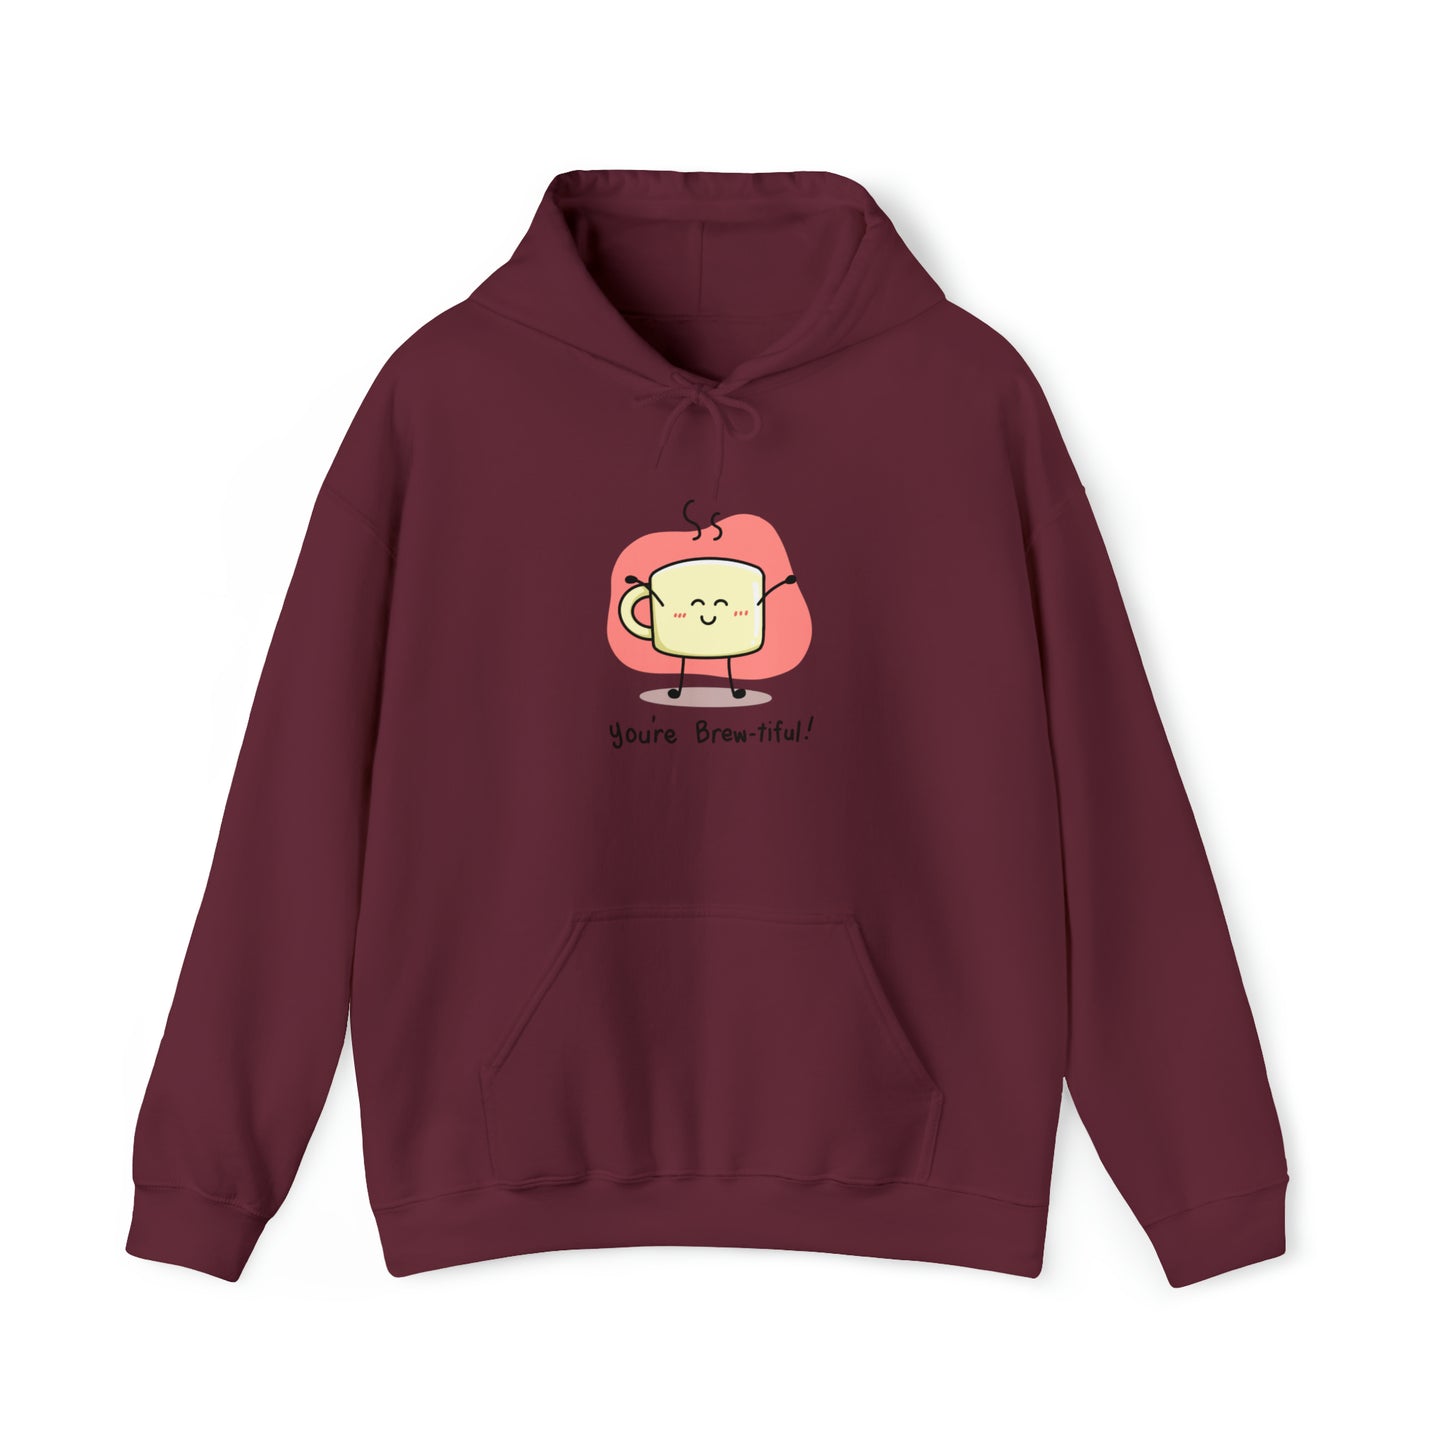 Custom Parody Hooded Sweatshirt, you're brewtiful design